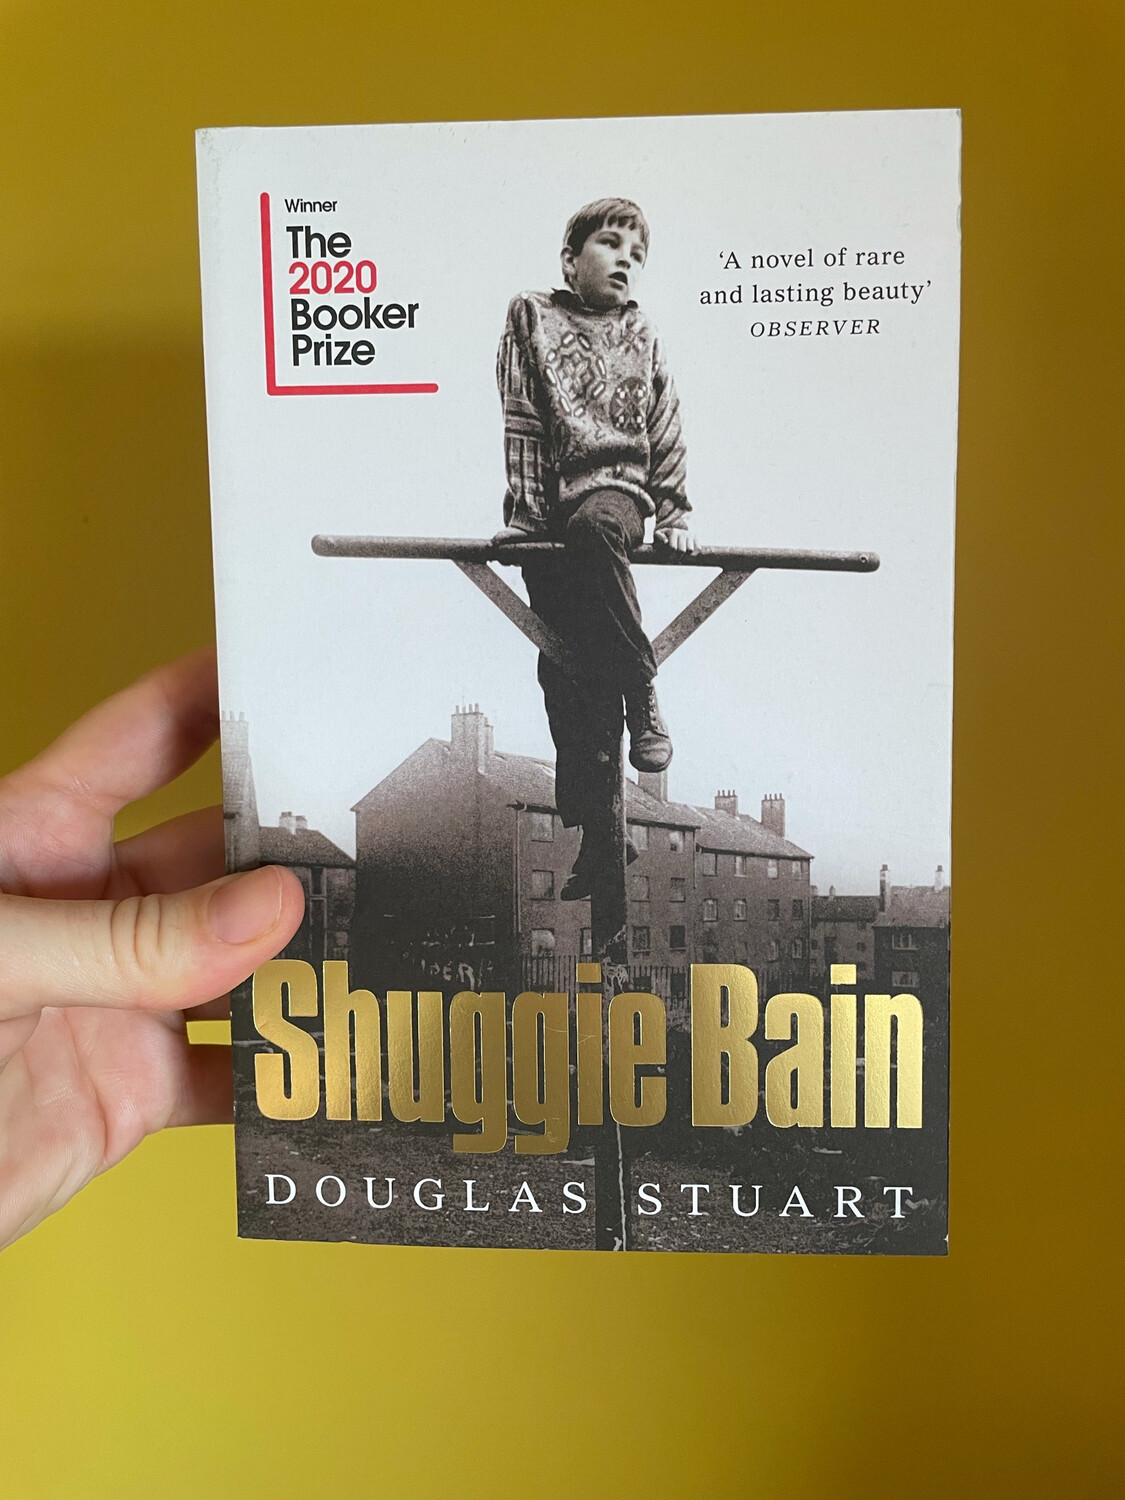 Shuggie Bain By Douglas Stuart